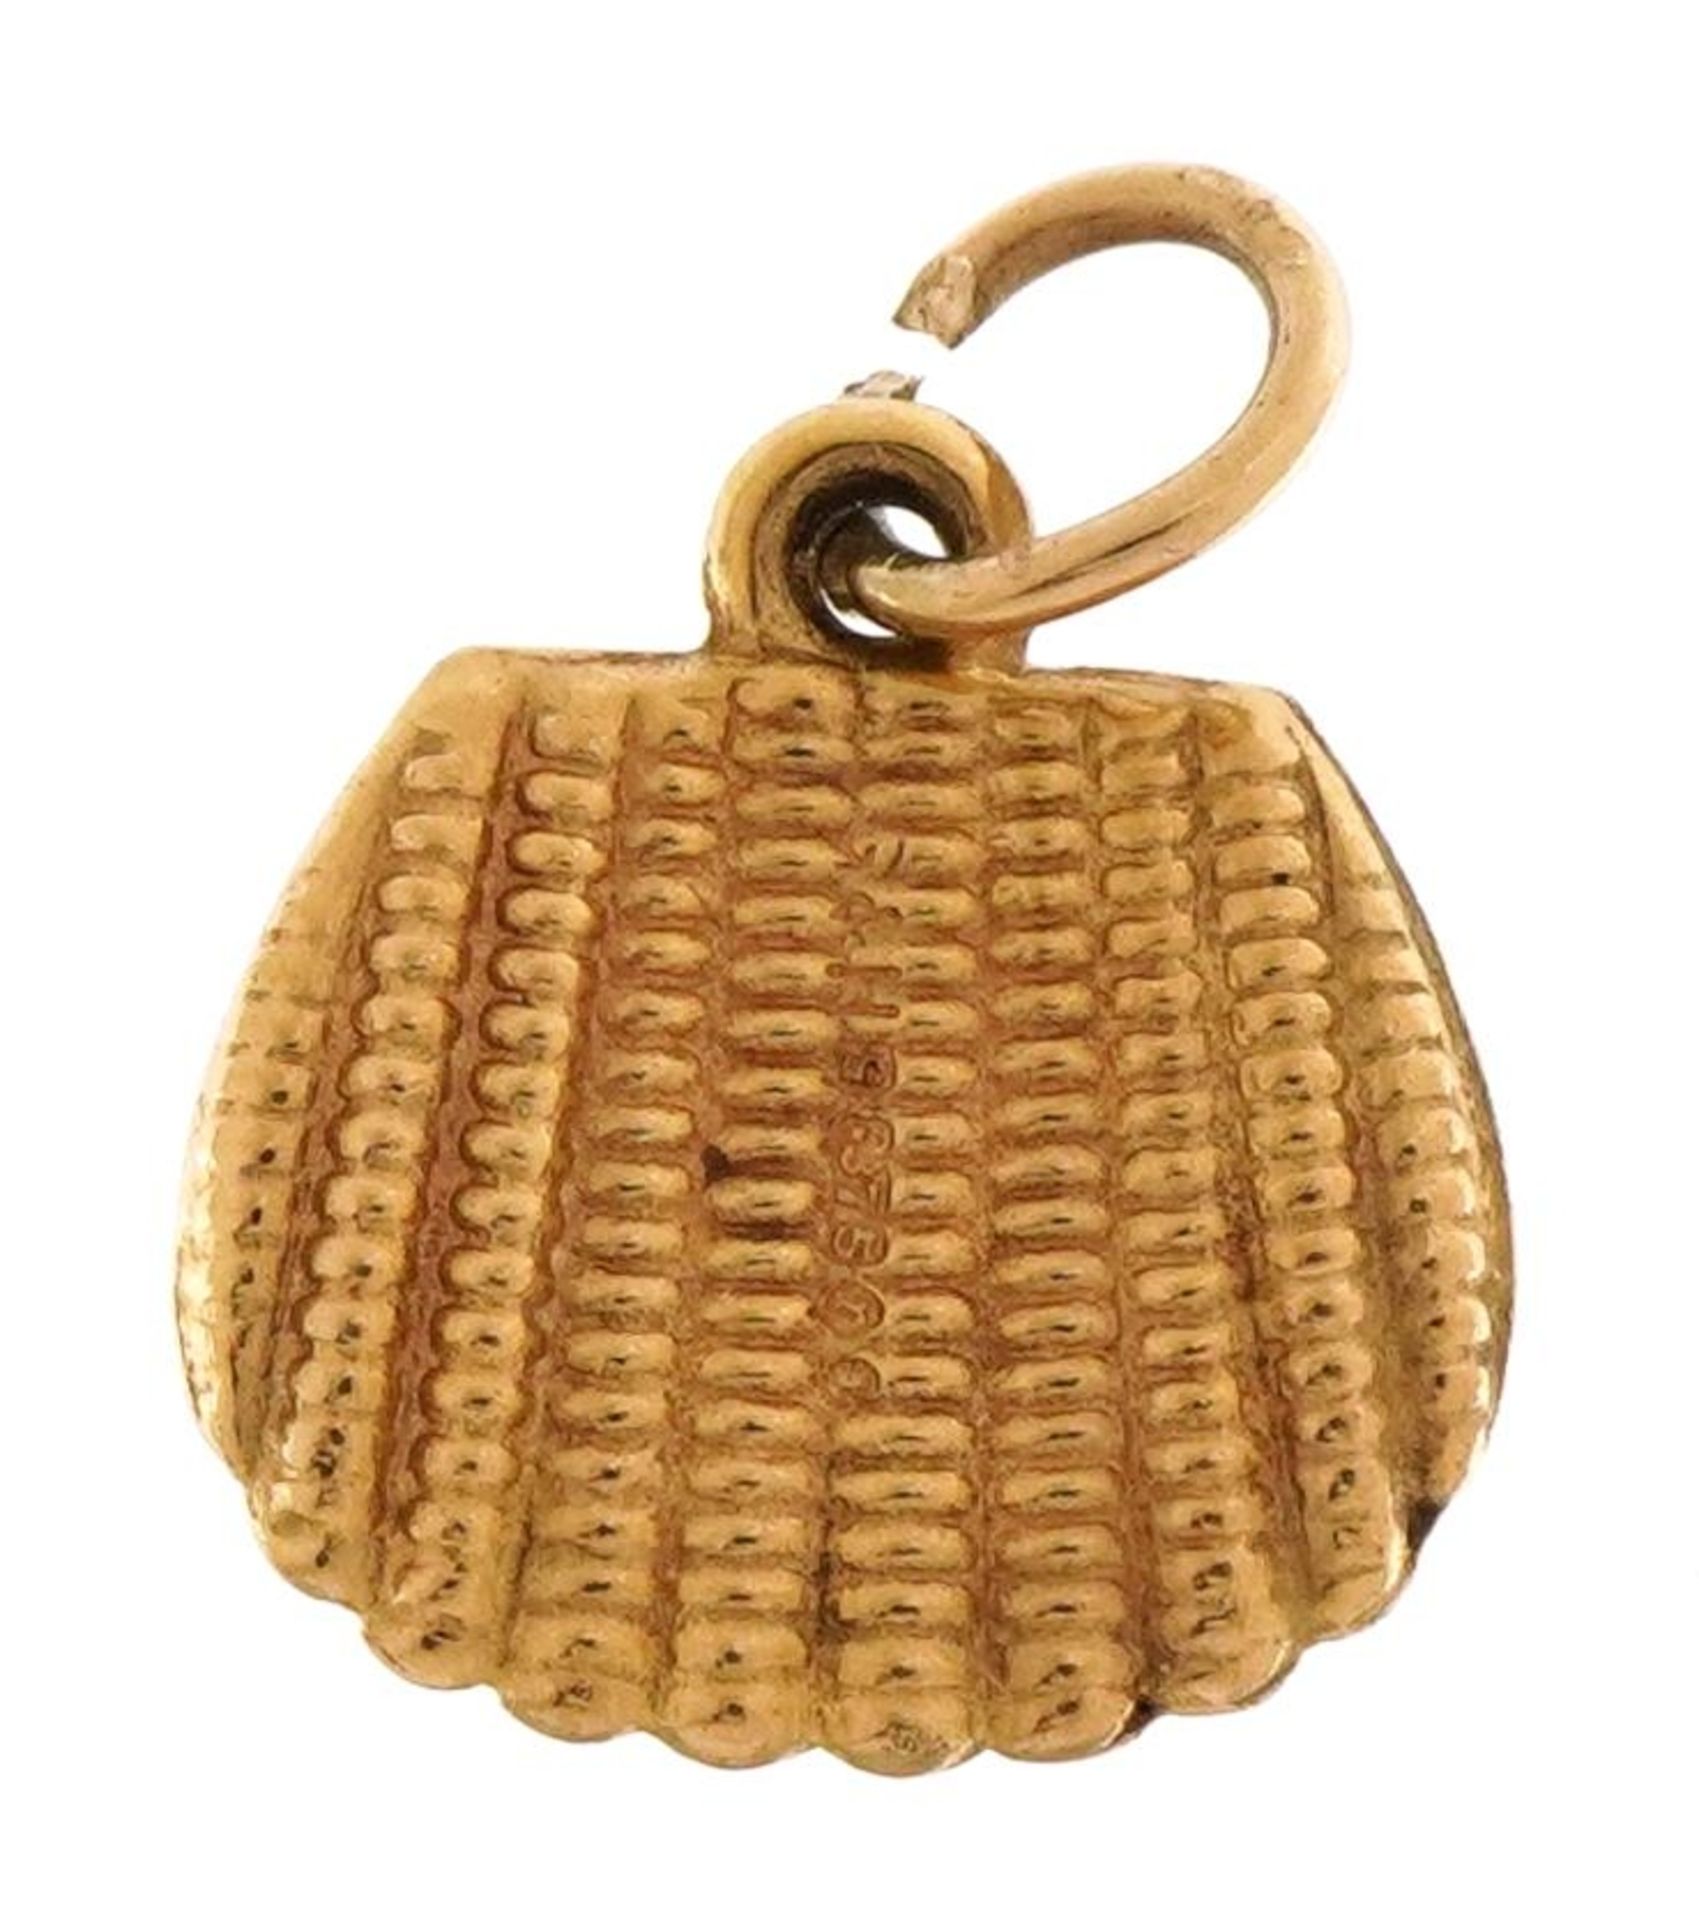 9ct gold handbag charm, 1.3cm high, 0.7g - Image 2 of 3